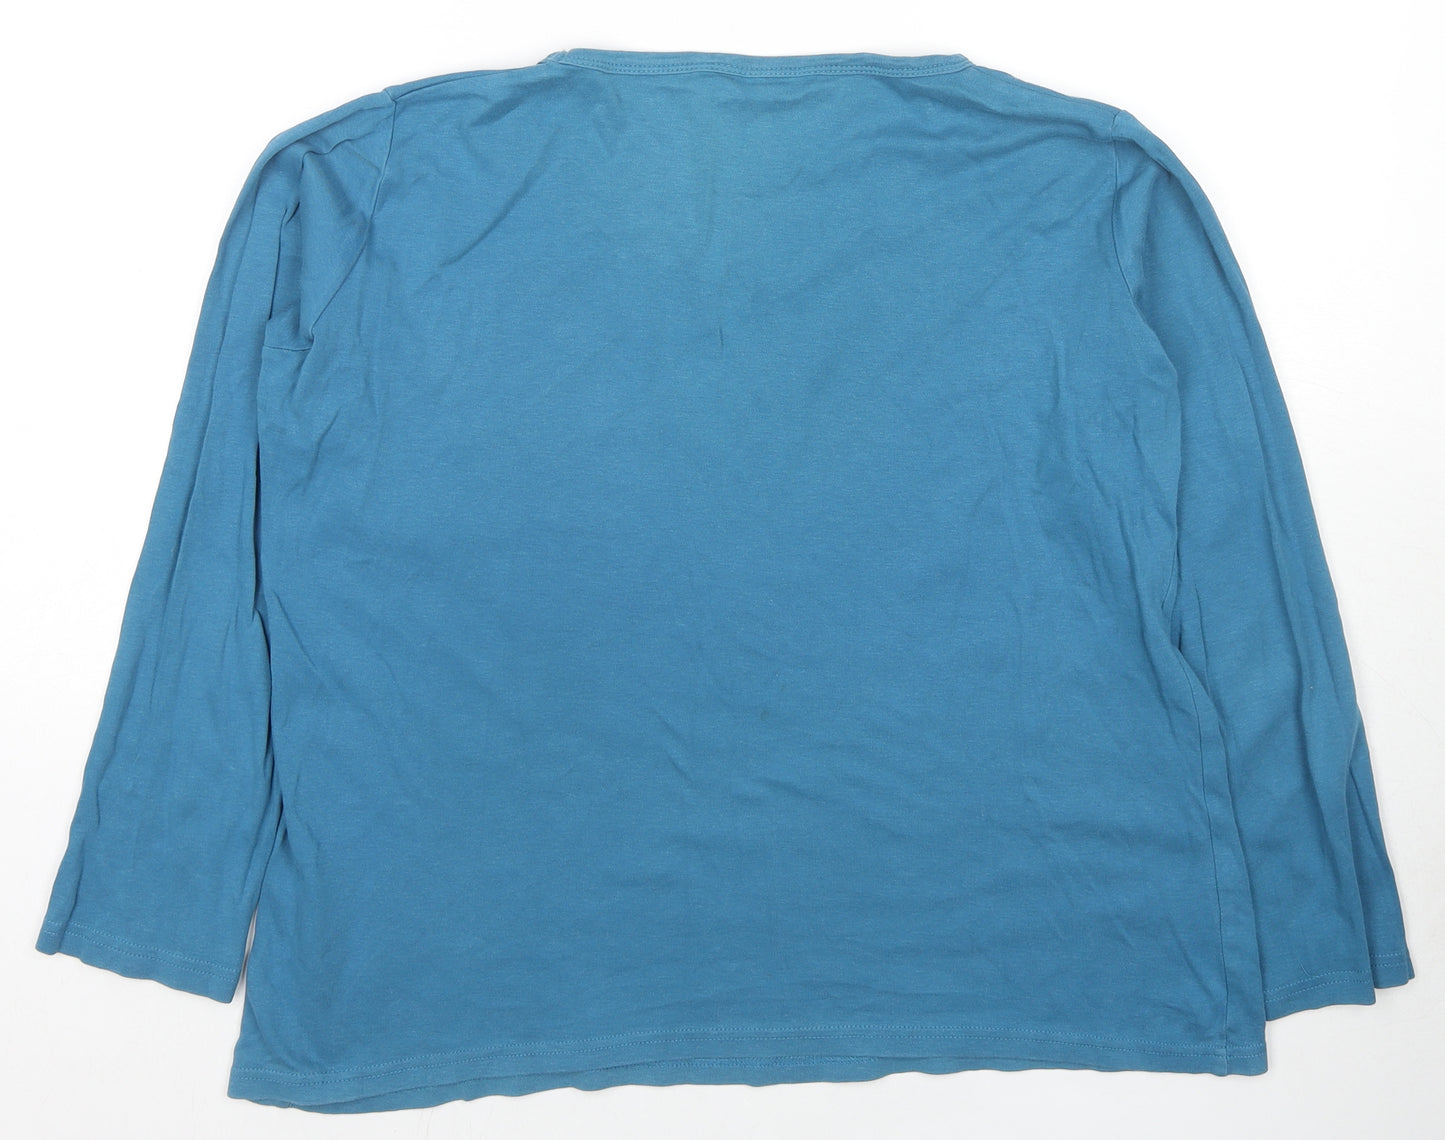 EWM Womens Blue Cotton Basic T-Shirt Size 18 V-Neck - Size 18-20